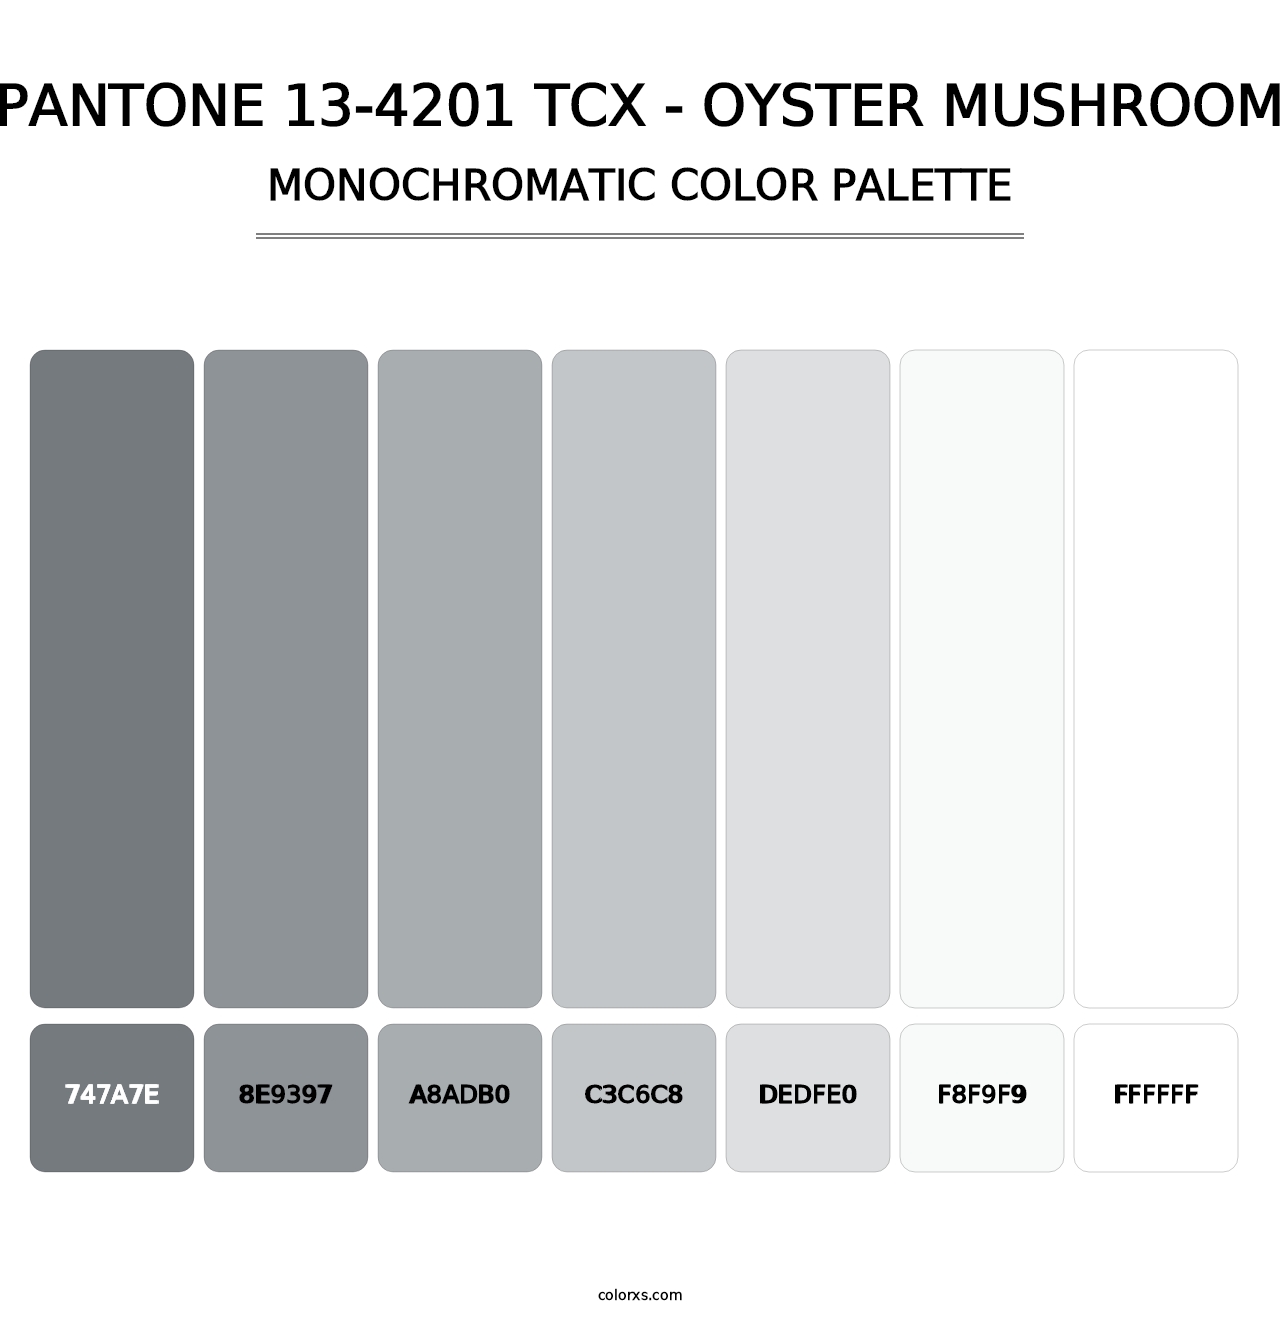 PANTONE 13-4201 TCX - Oyster Mushroom - Monochromatic Color Palette